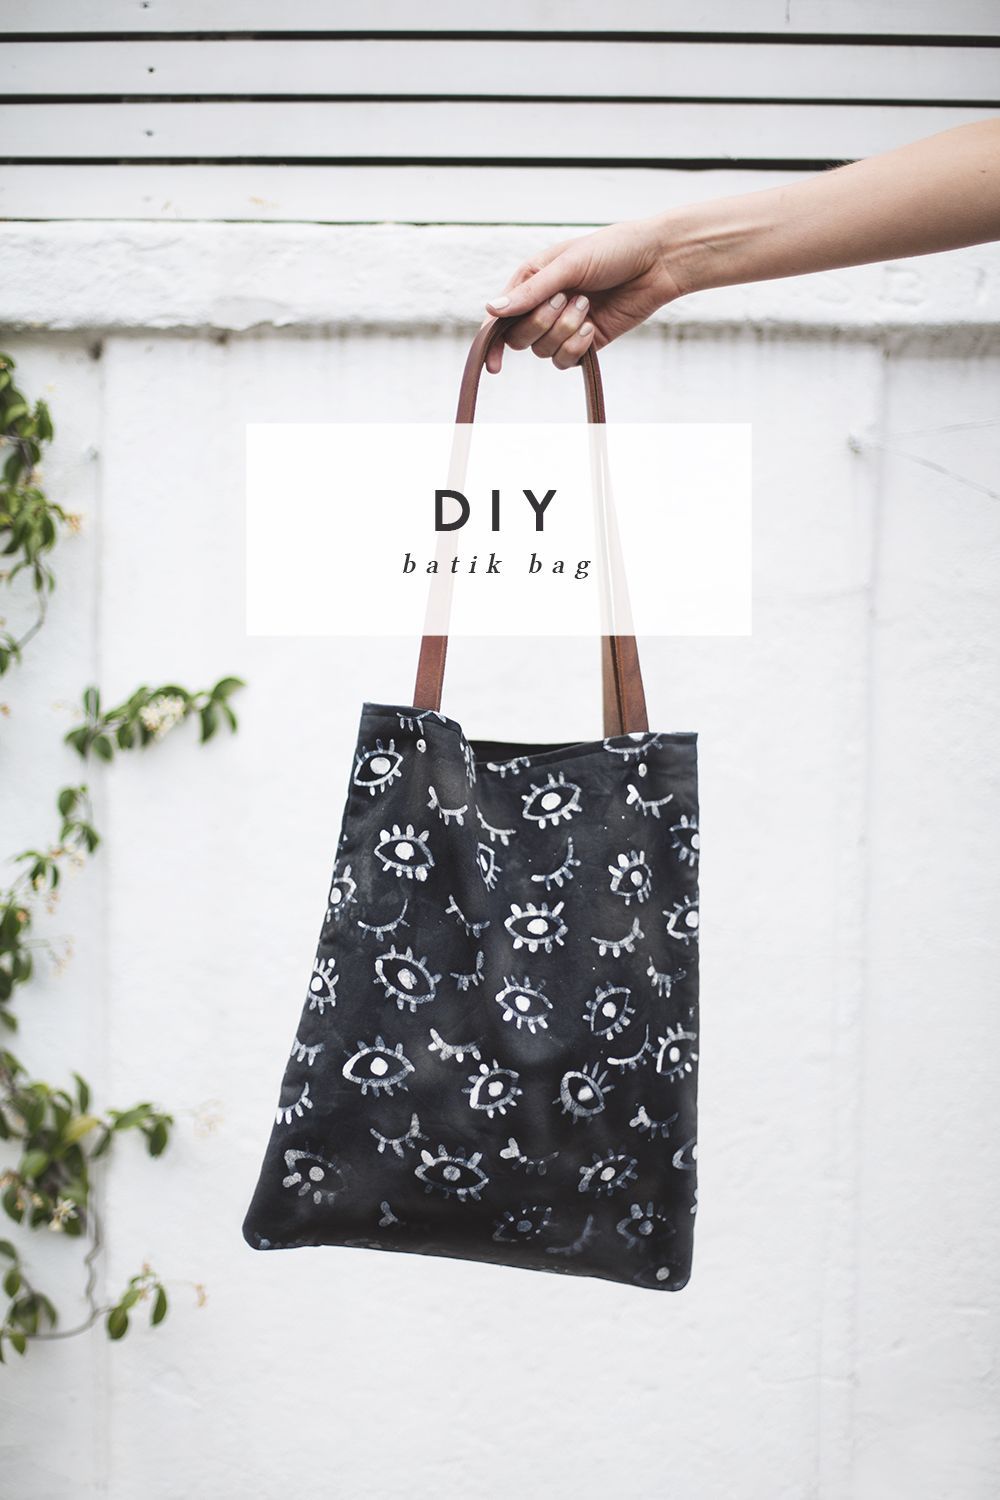 summer style -   25 diy summer bag
 ideas